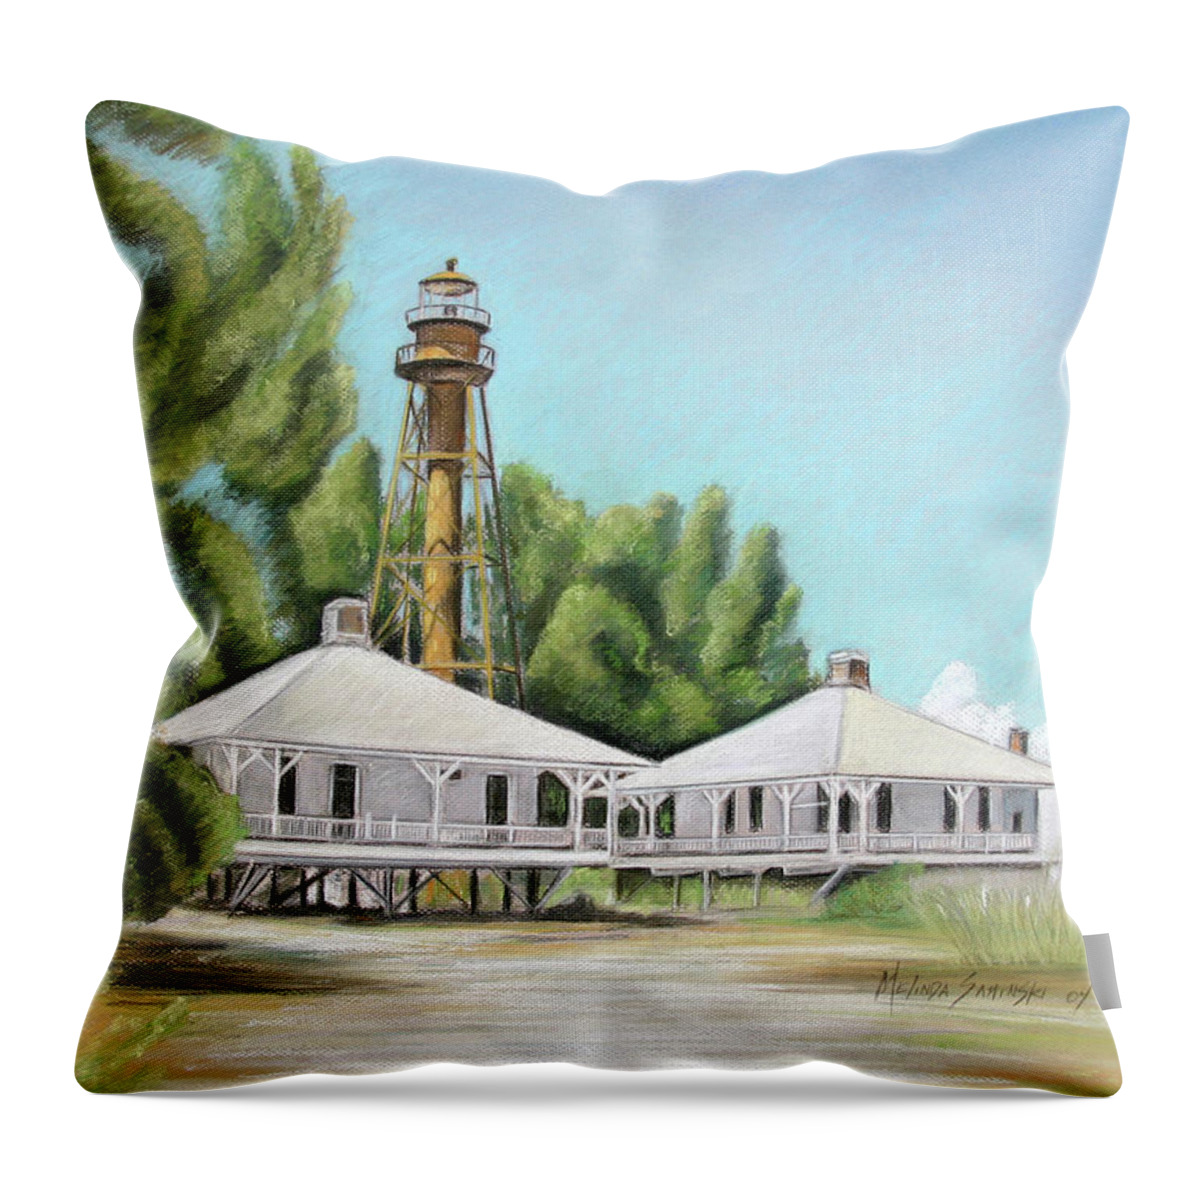  Sanibel Lighthouse Throw Pillow featuring the painting Sanibel Lighthouse by Melinda Saminski